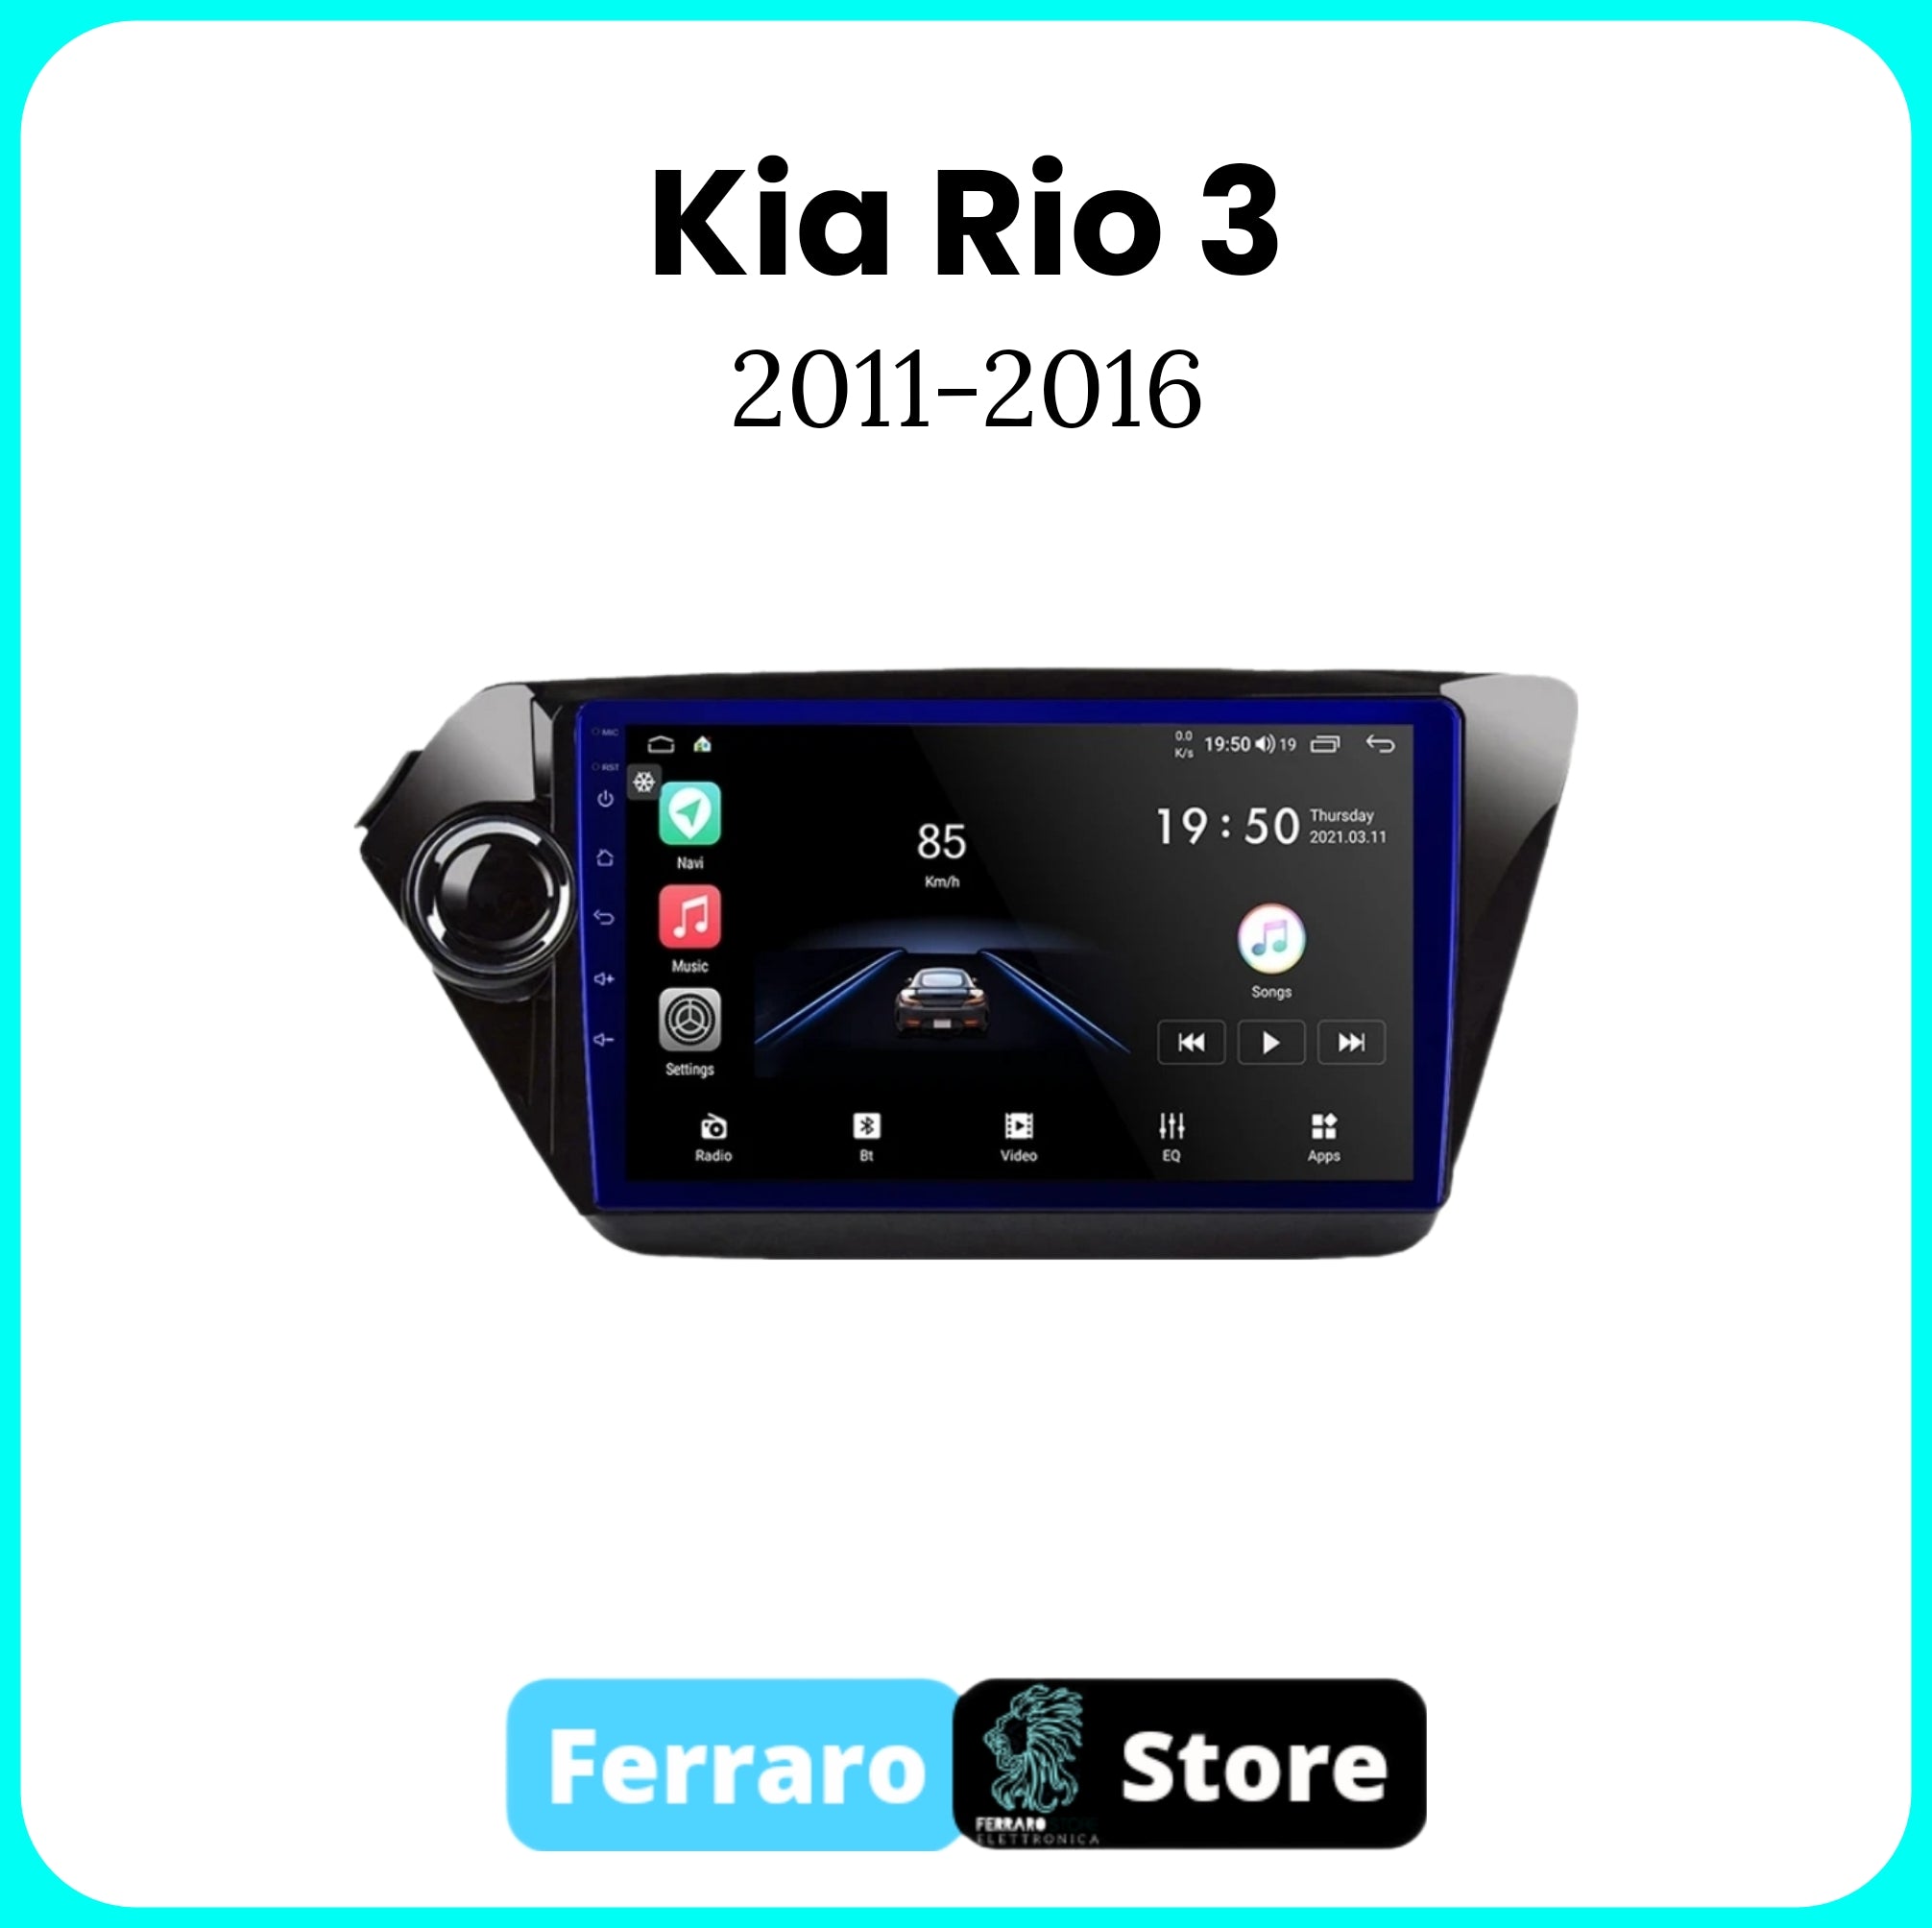 Autoradio per KIA RIO 3 [2011- 2016] - Sistema auto Intelligente, 2Din 9"Pollici, GPS, Navigatore, Wifi